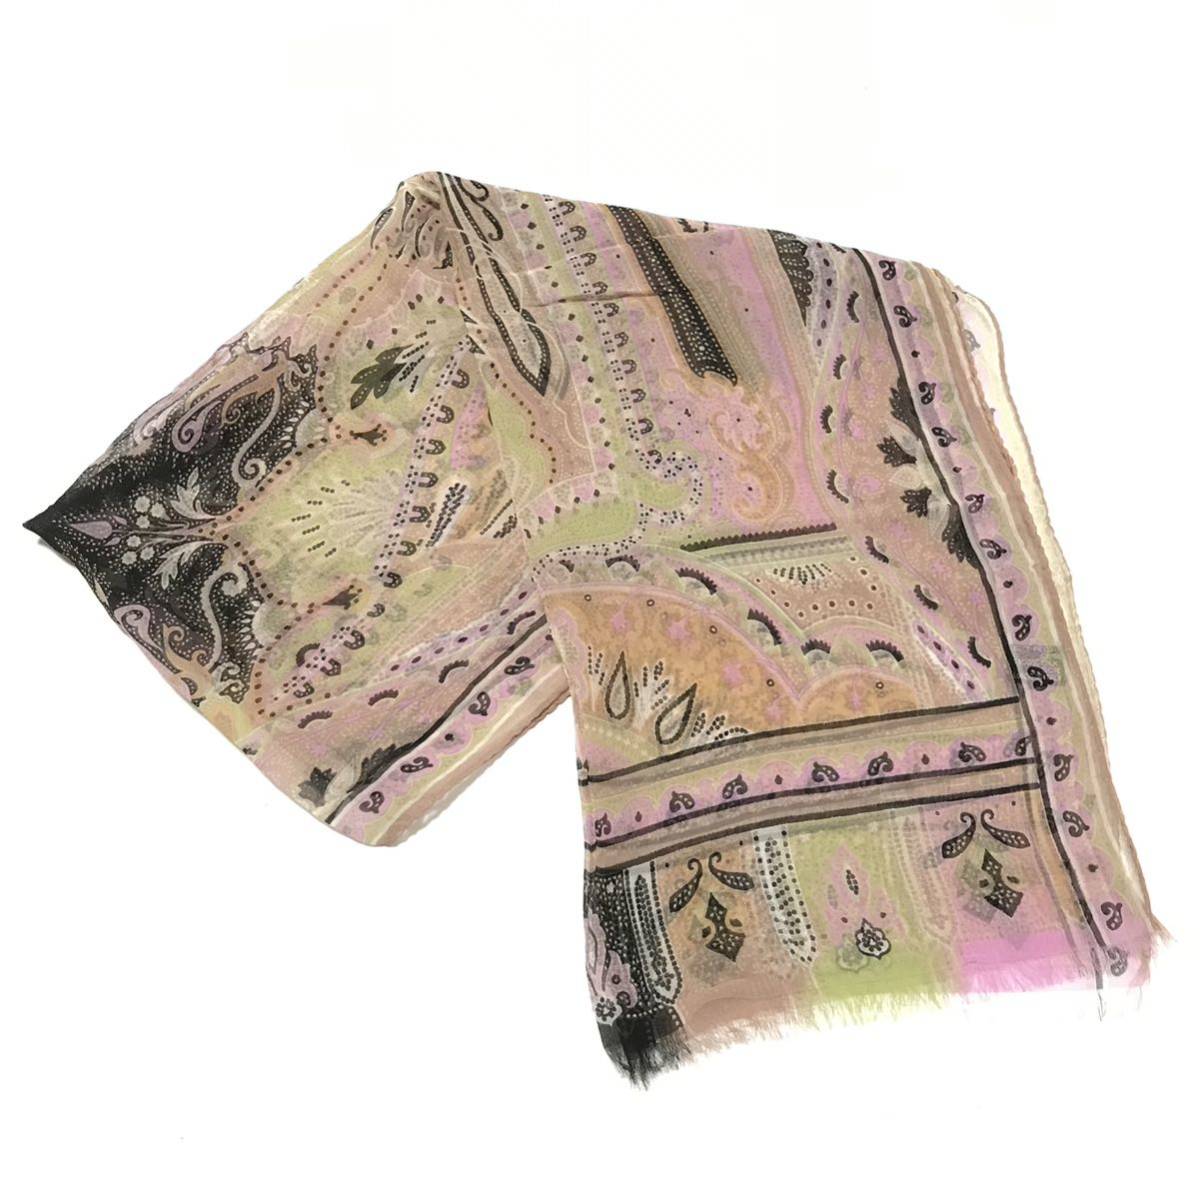 [ Etro ] genuine article ETRO stole peiz Lee pattern total length 132cm width 41cm silk 100% muffler shawl men's lady's Italy made postage 370 jpy 